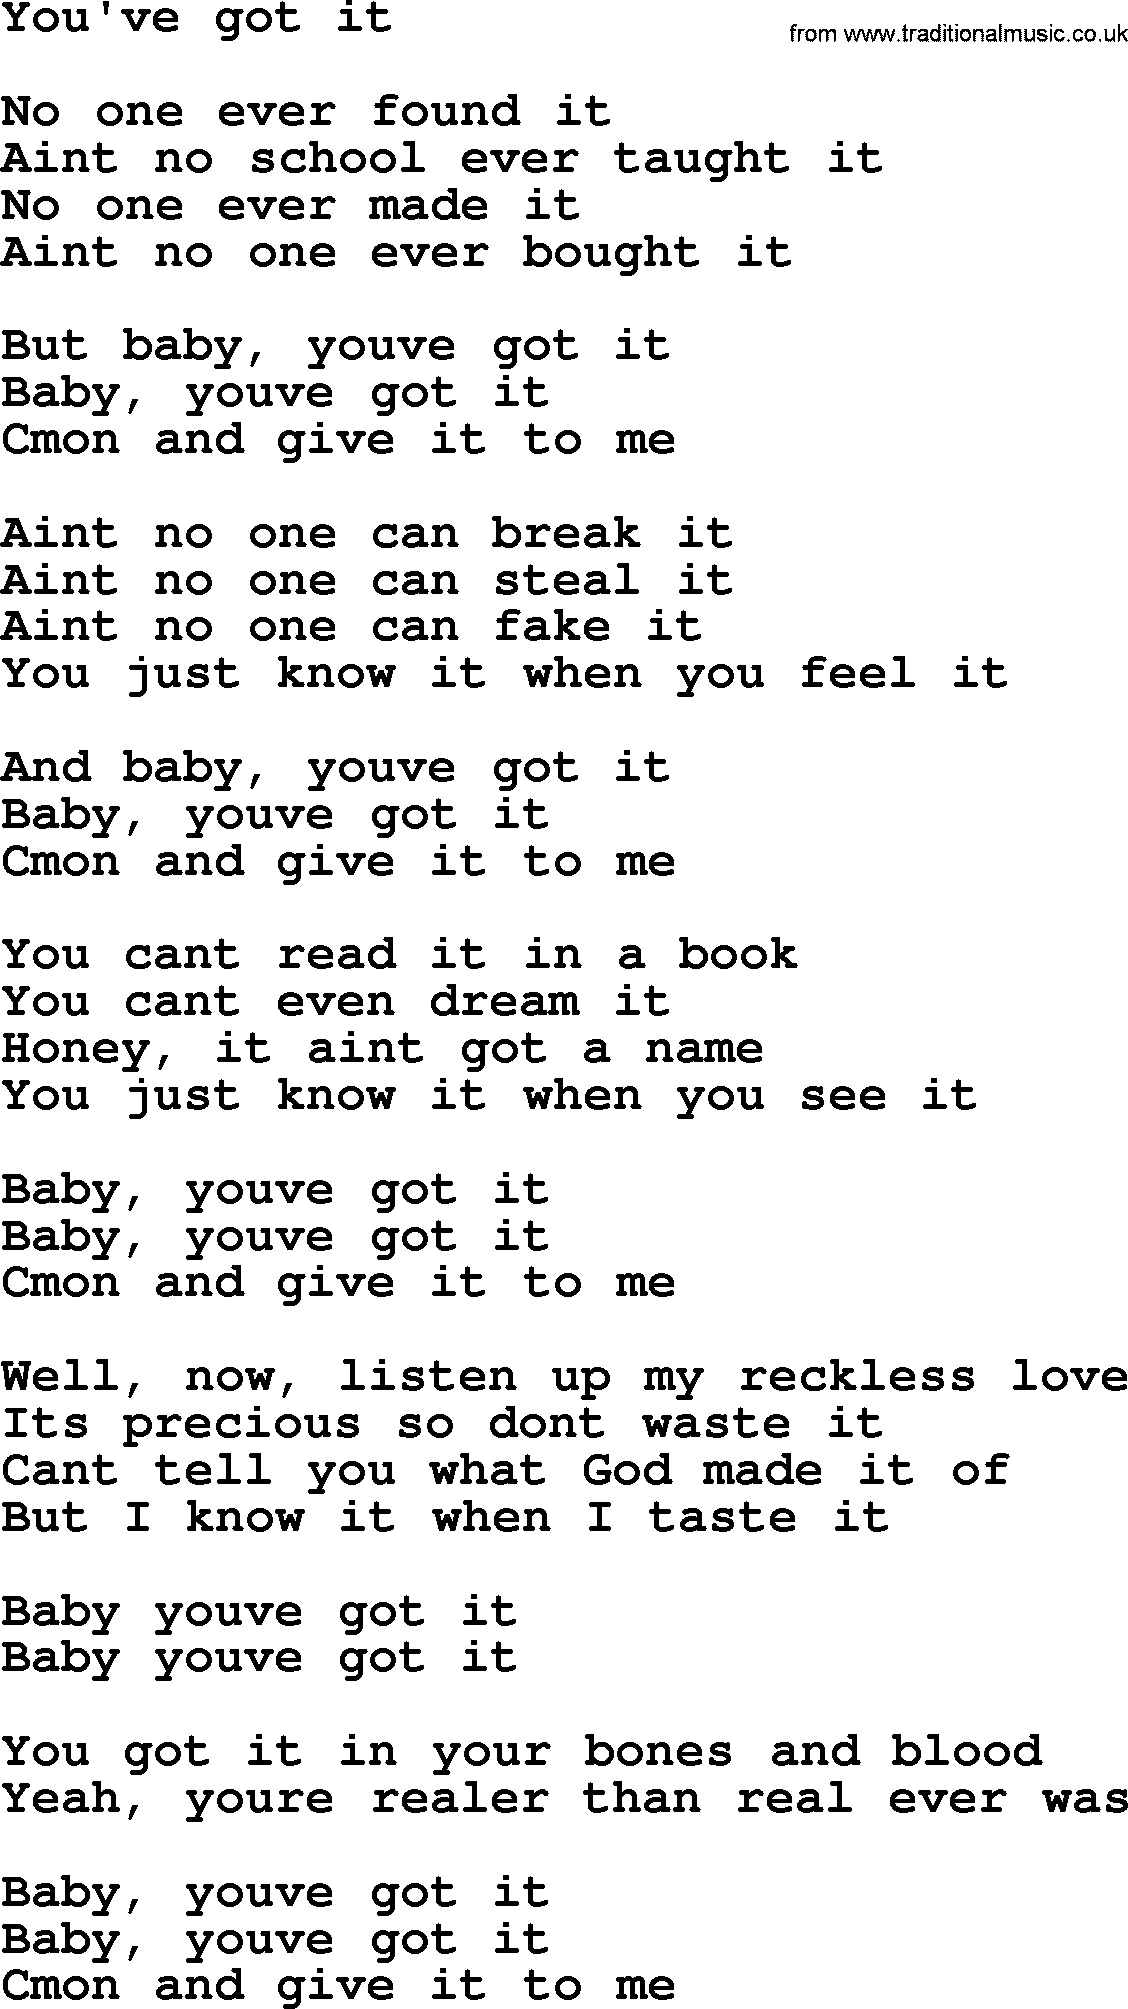 Bruce Springsteen song: You've Got It lyrics